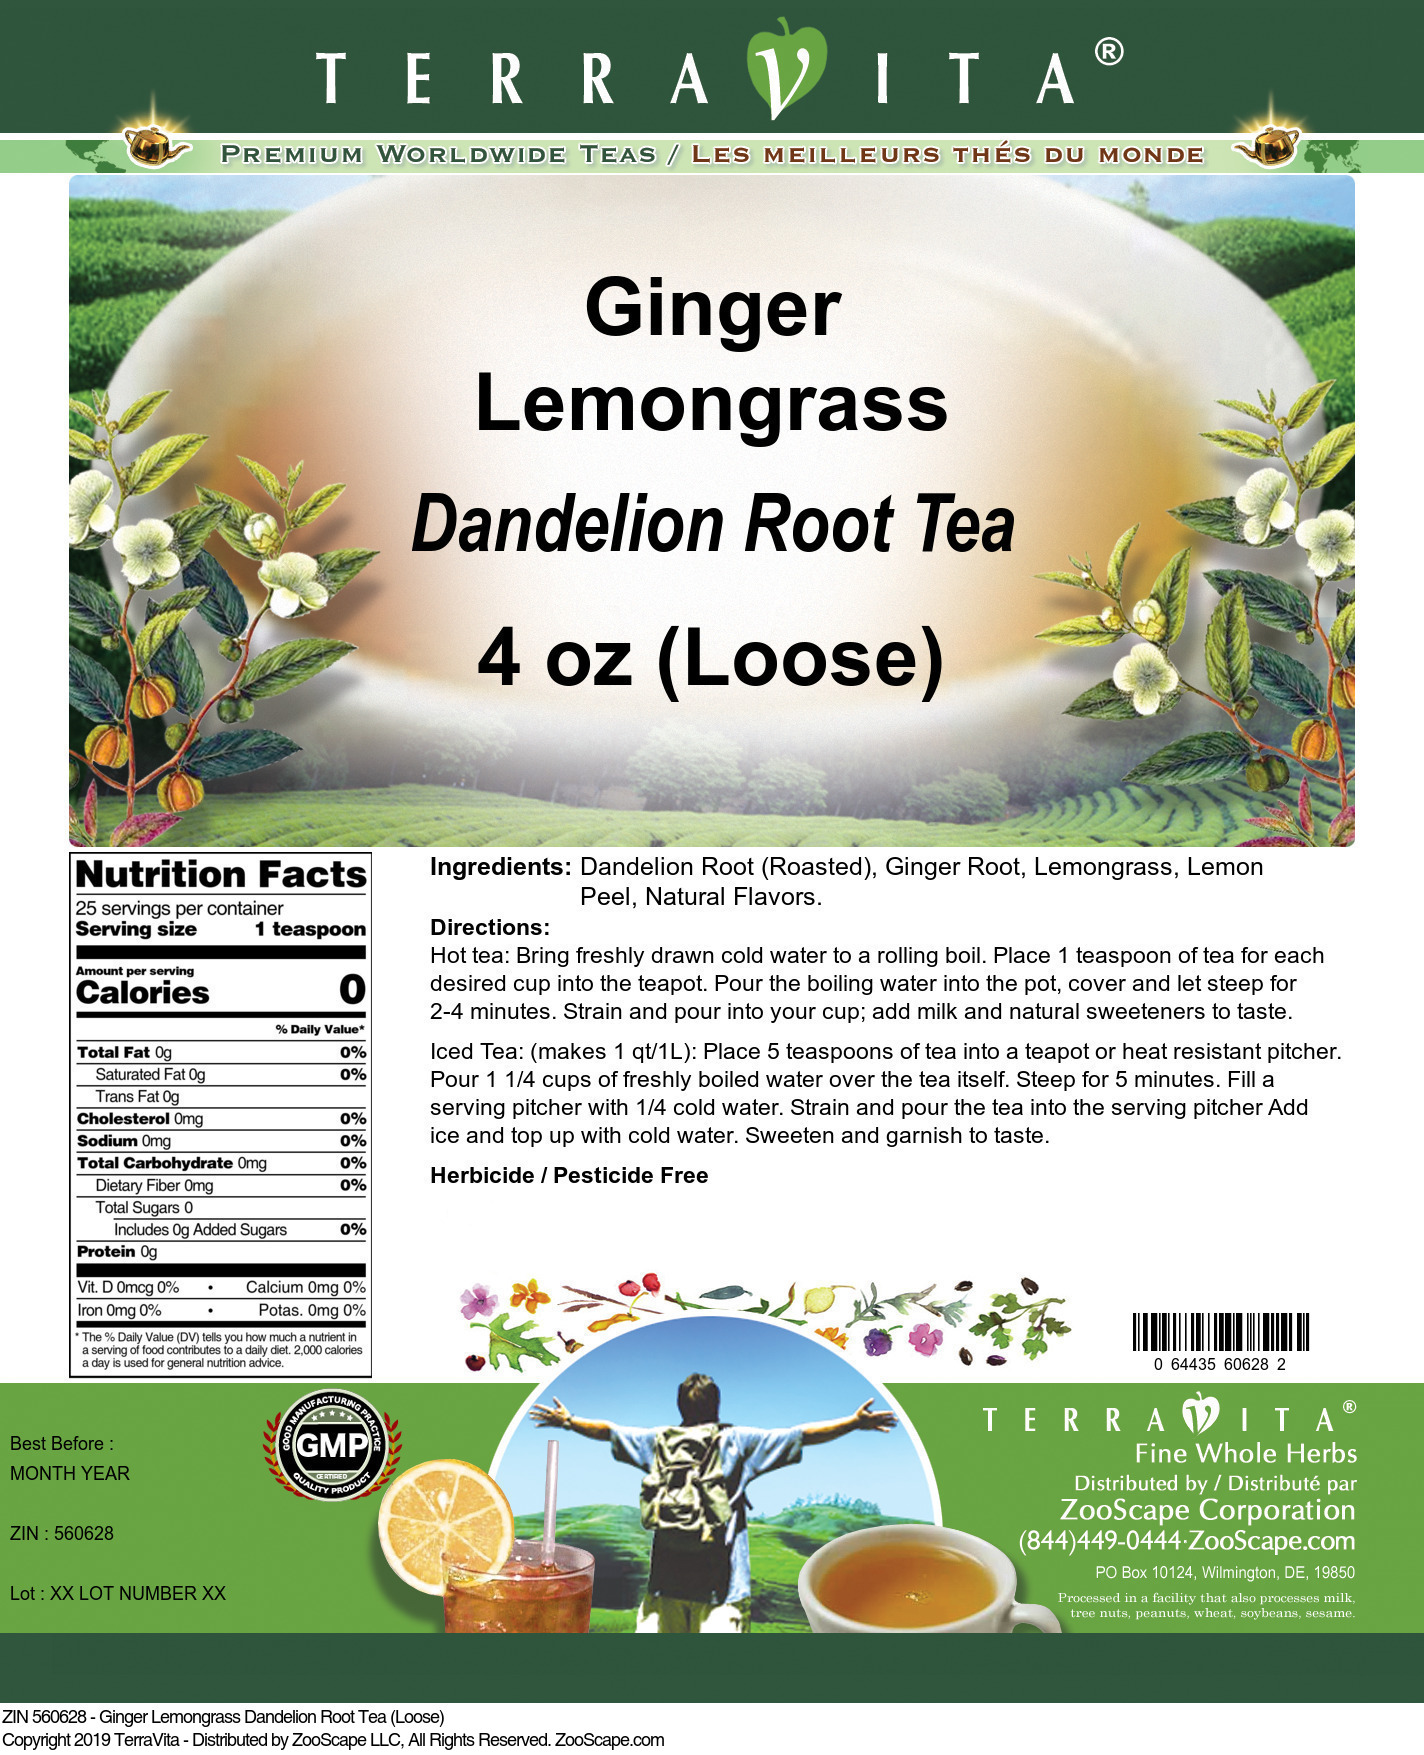 Ginger Lemongrass Dandelion Root Tea (Loose) - Label